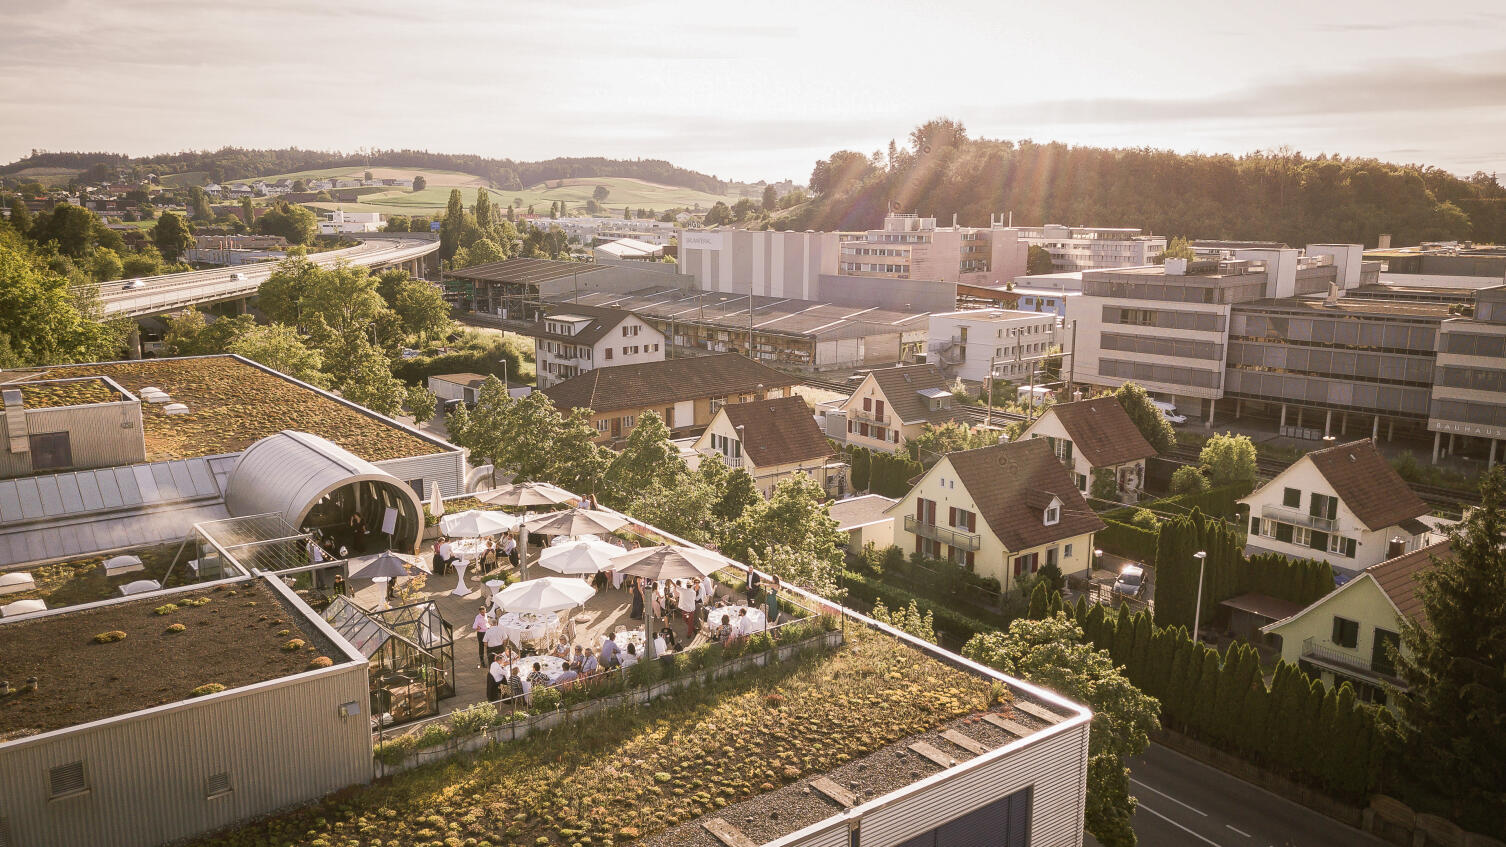 Kulinarium Bern - by Gourmetbox